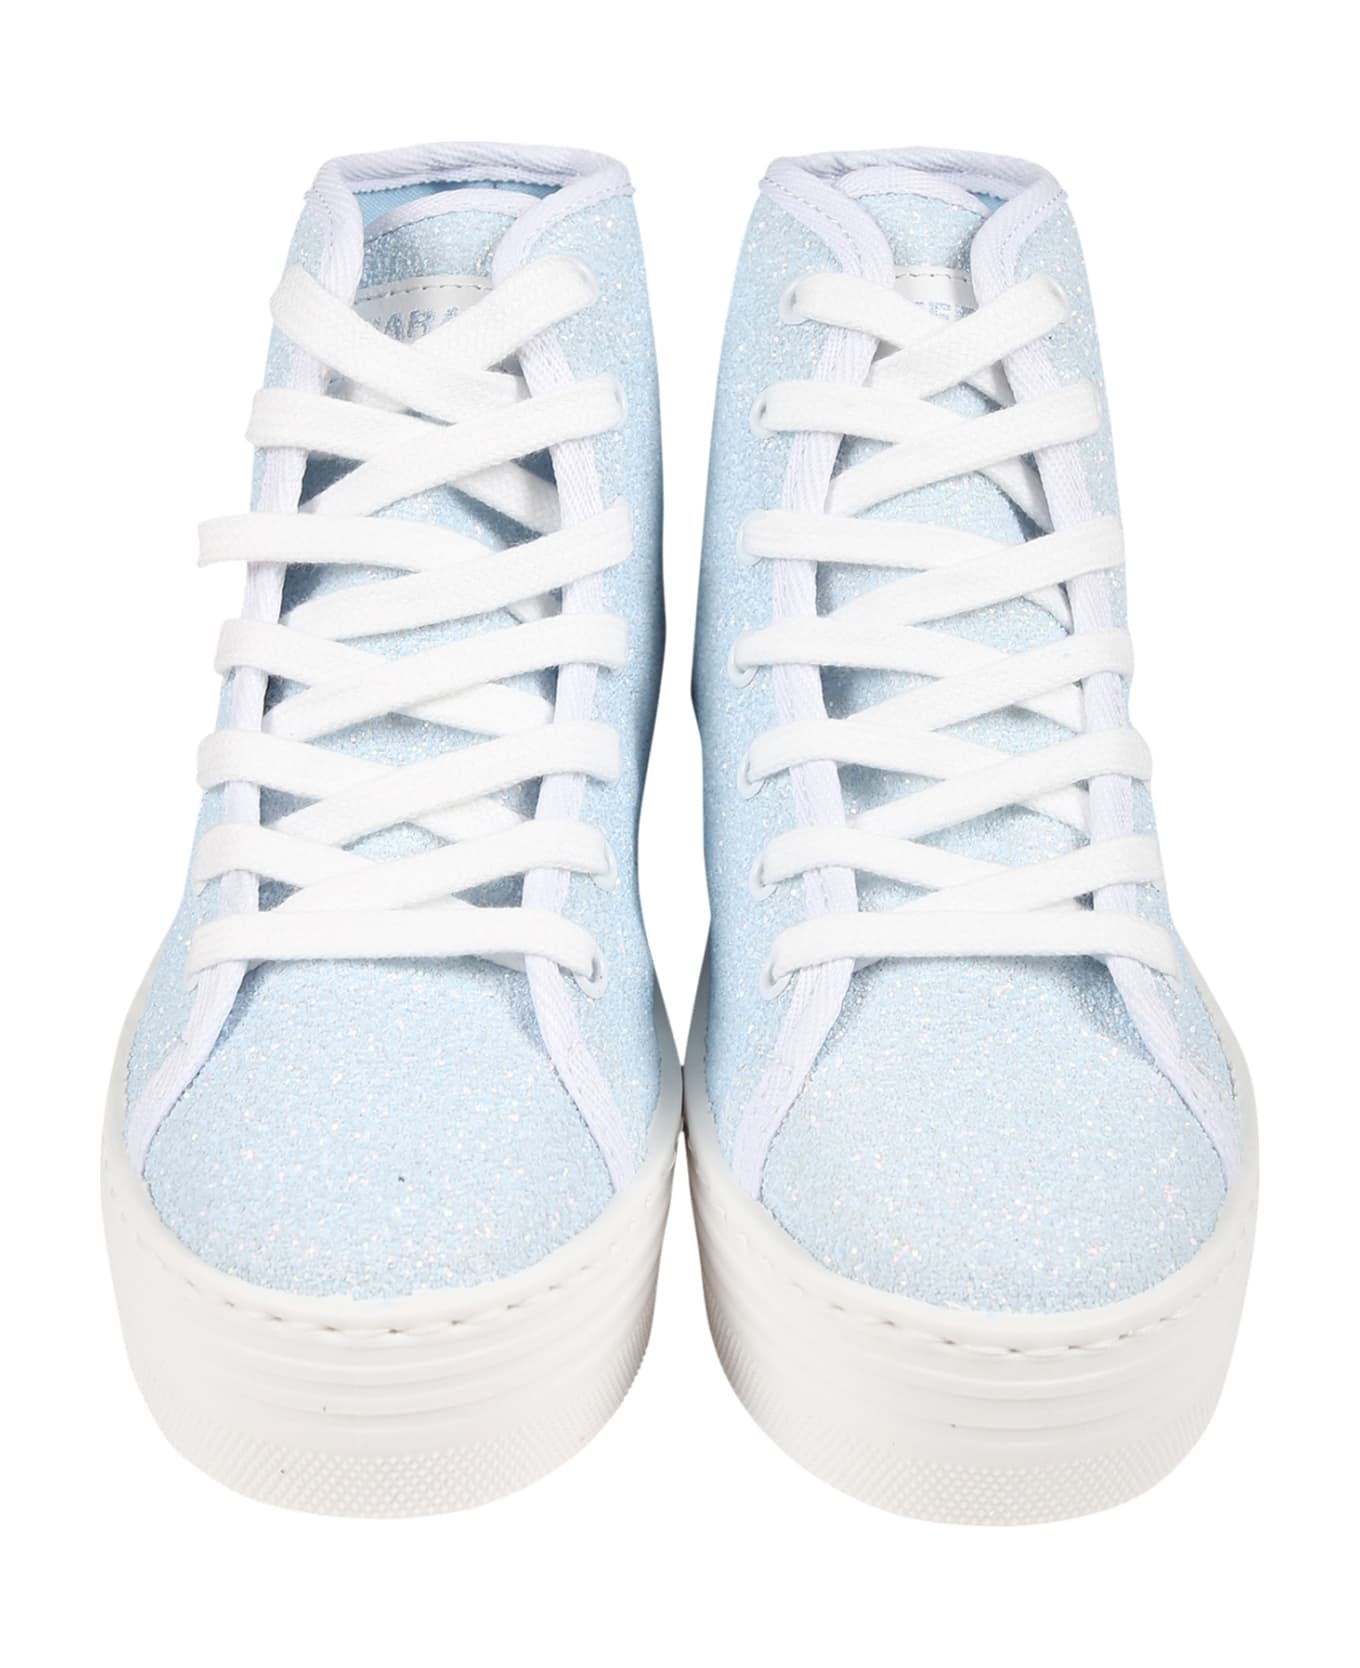 Chiara Ferragni Light Blue Sneakers For Girl With Wink - Blue